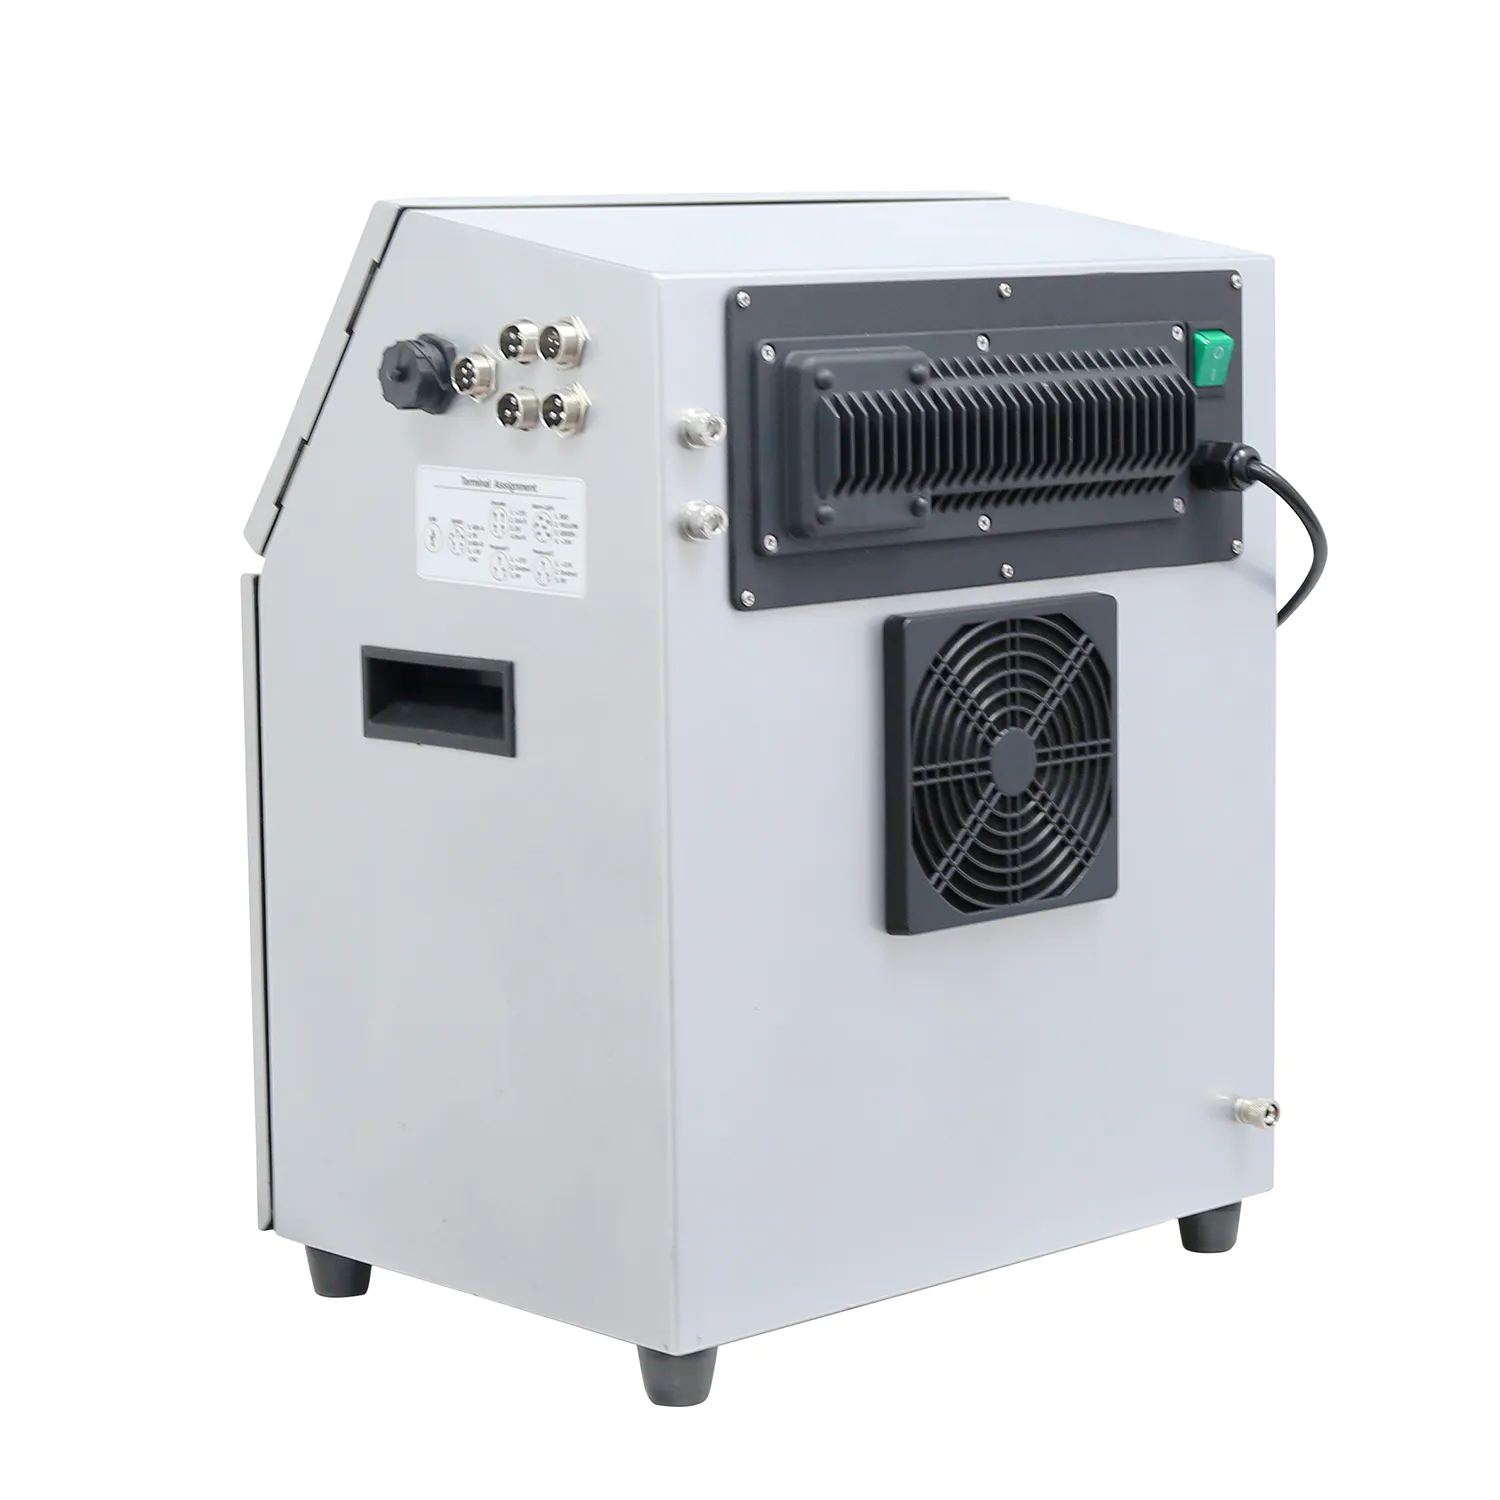 Leadtech Lt800 Laser Printing Industrial Inkjet Printer